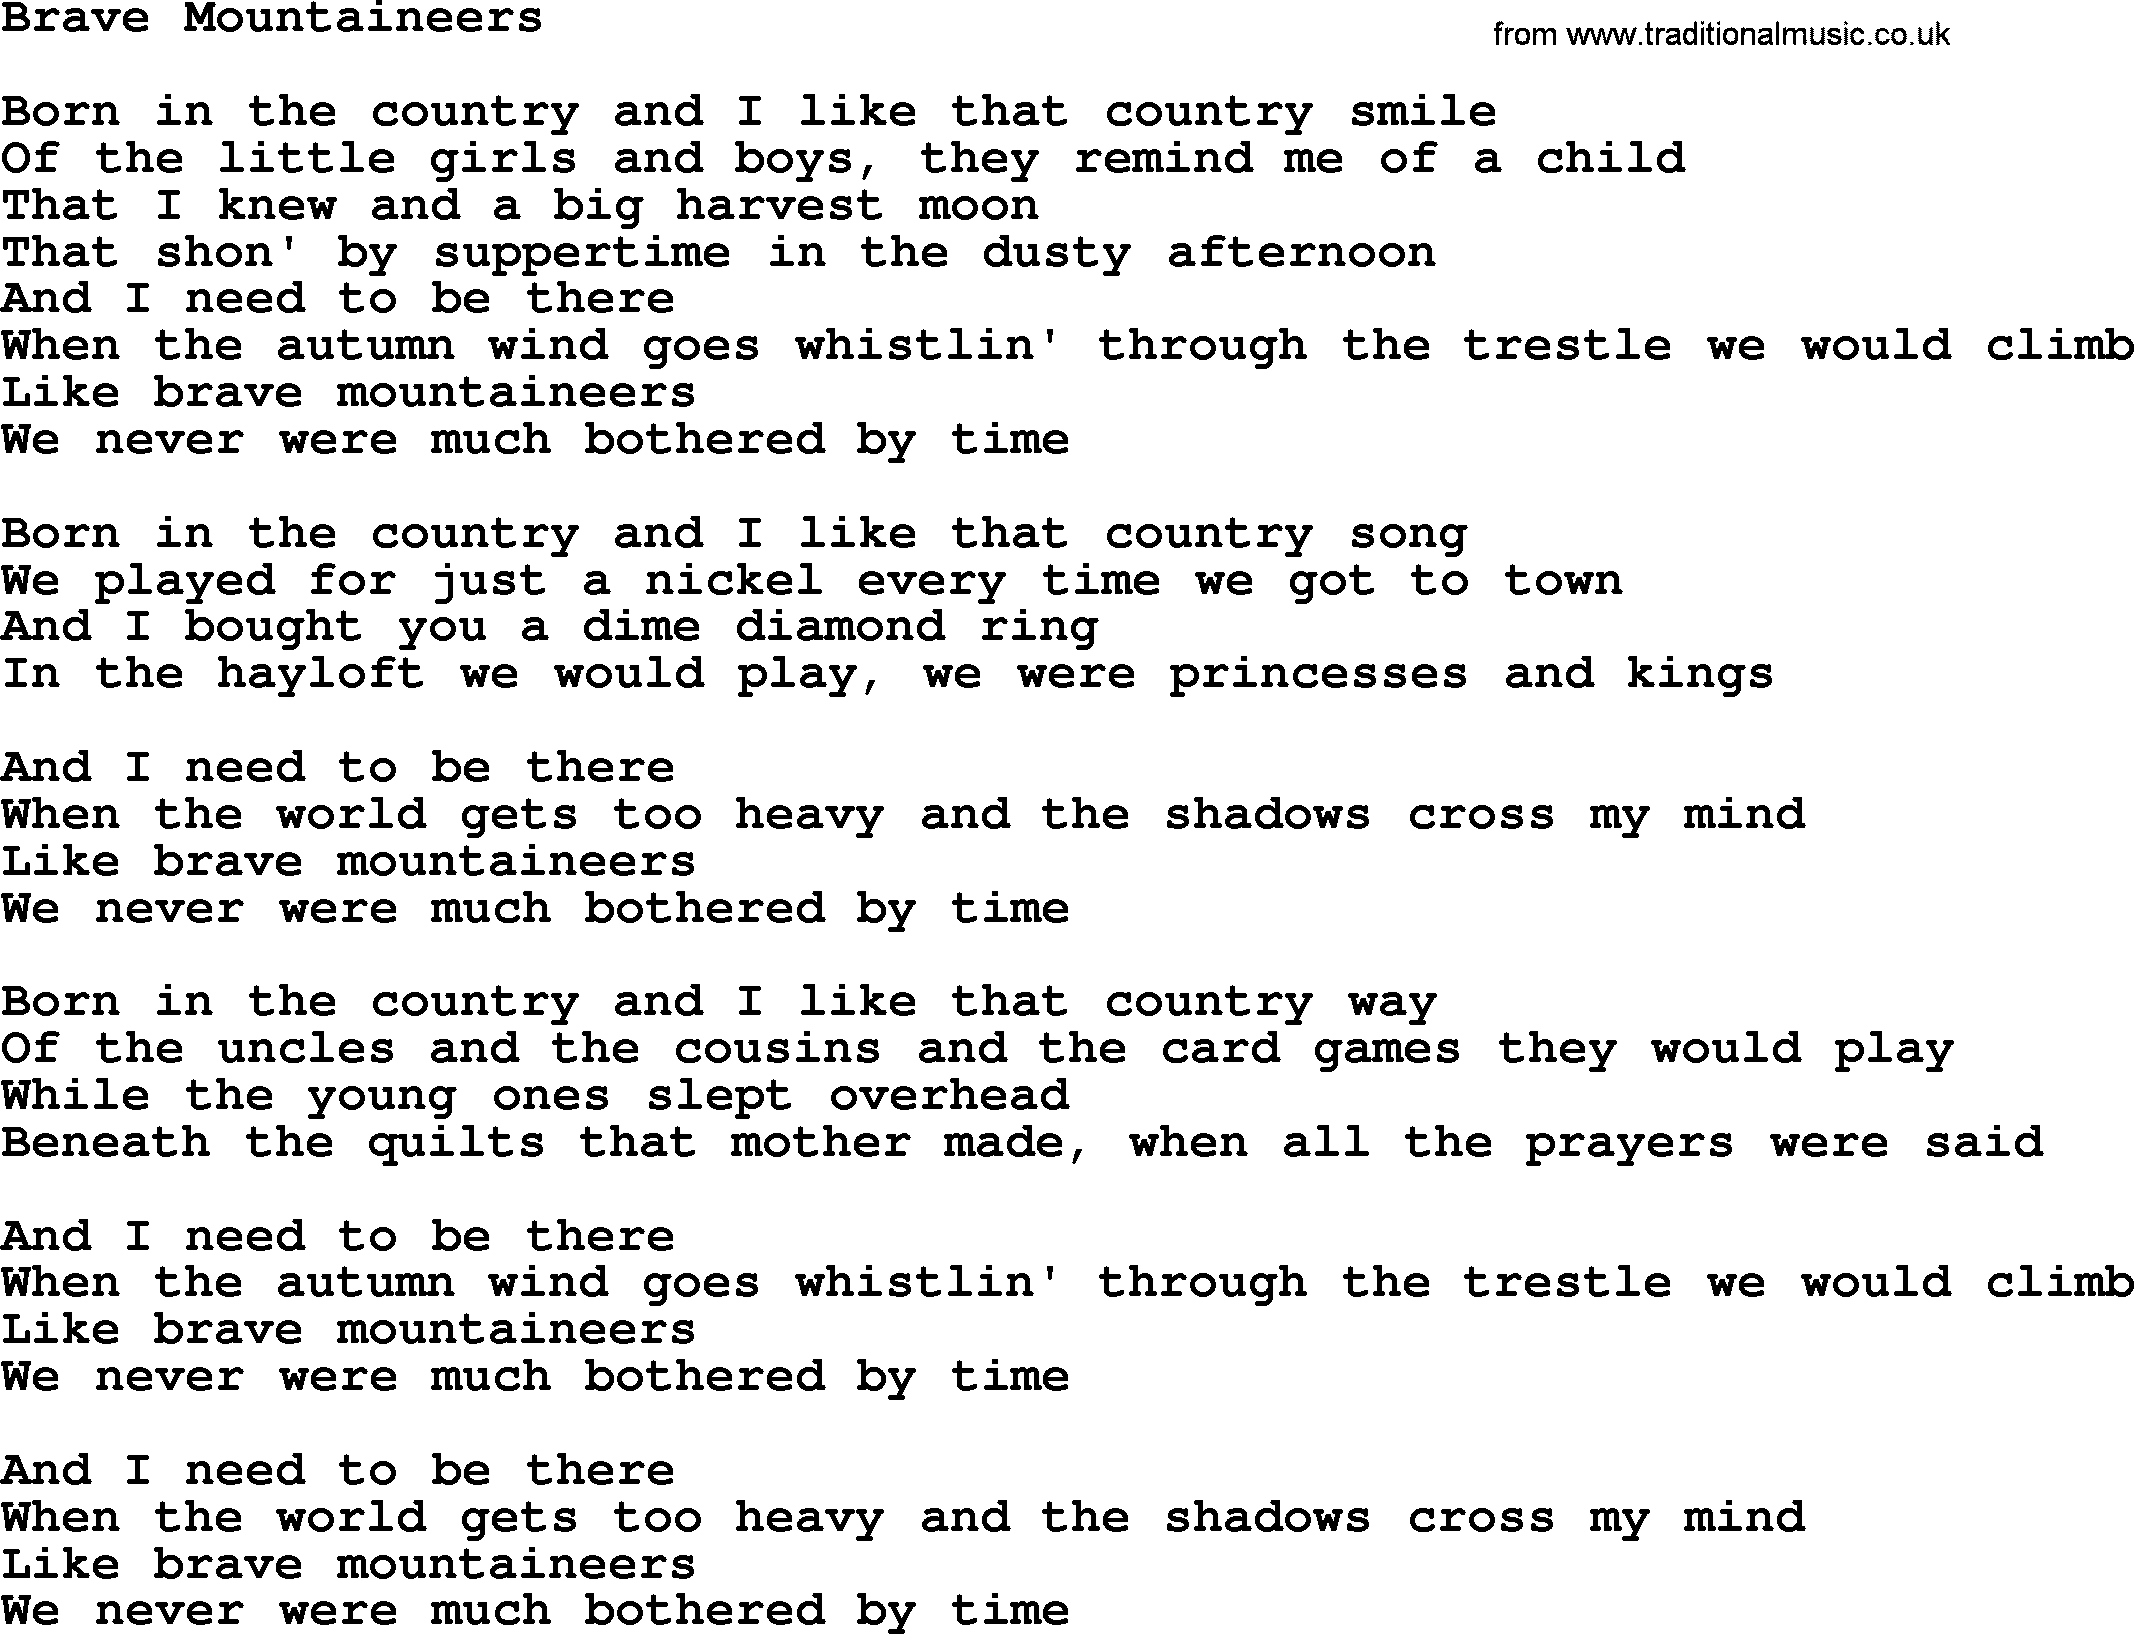 Gordon Lightfoot song Brave Mountaineers, lyrics